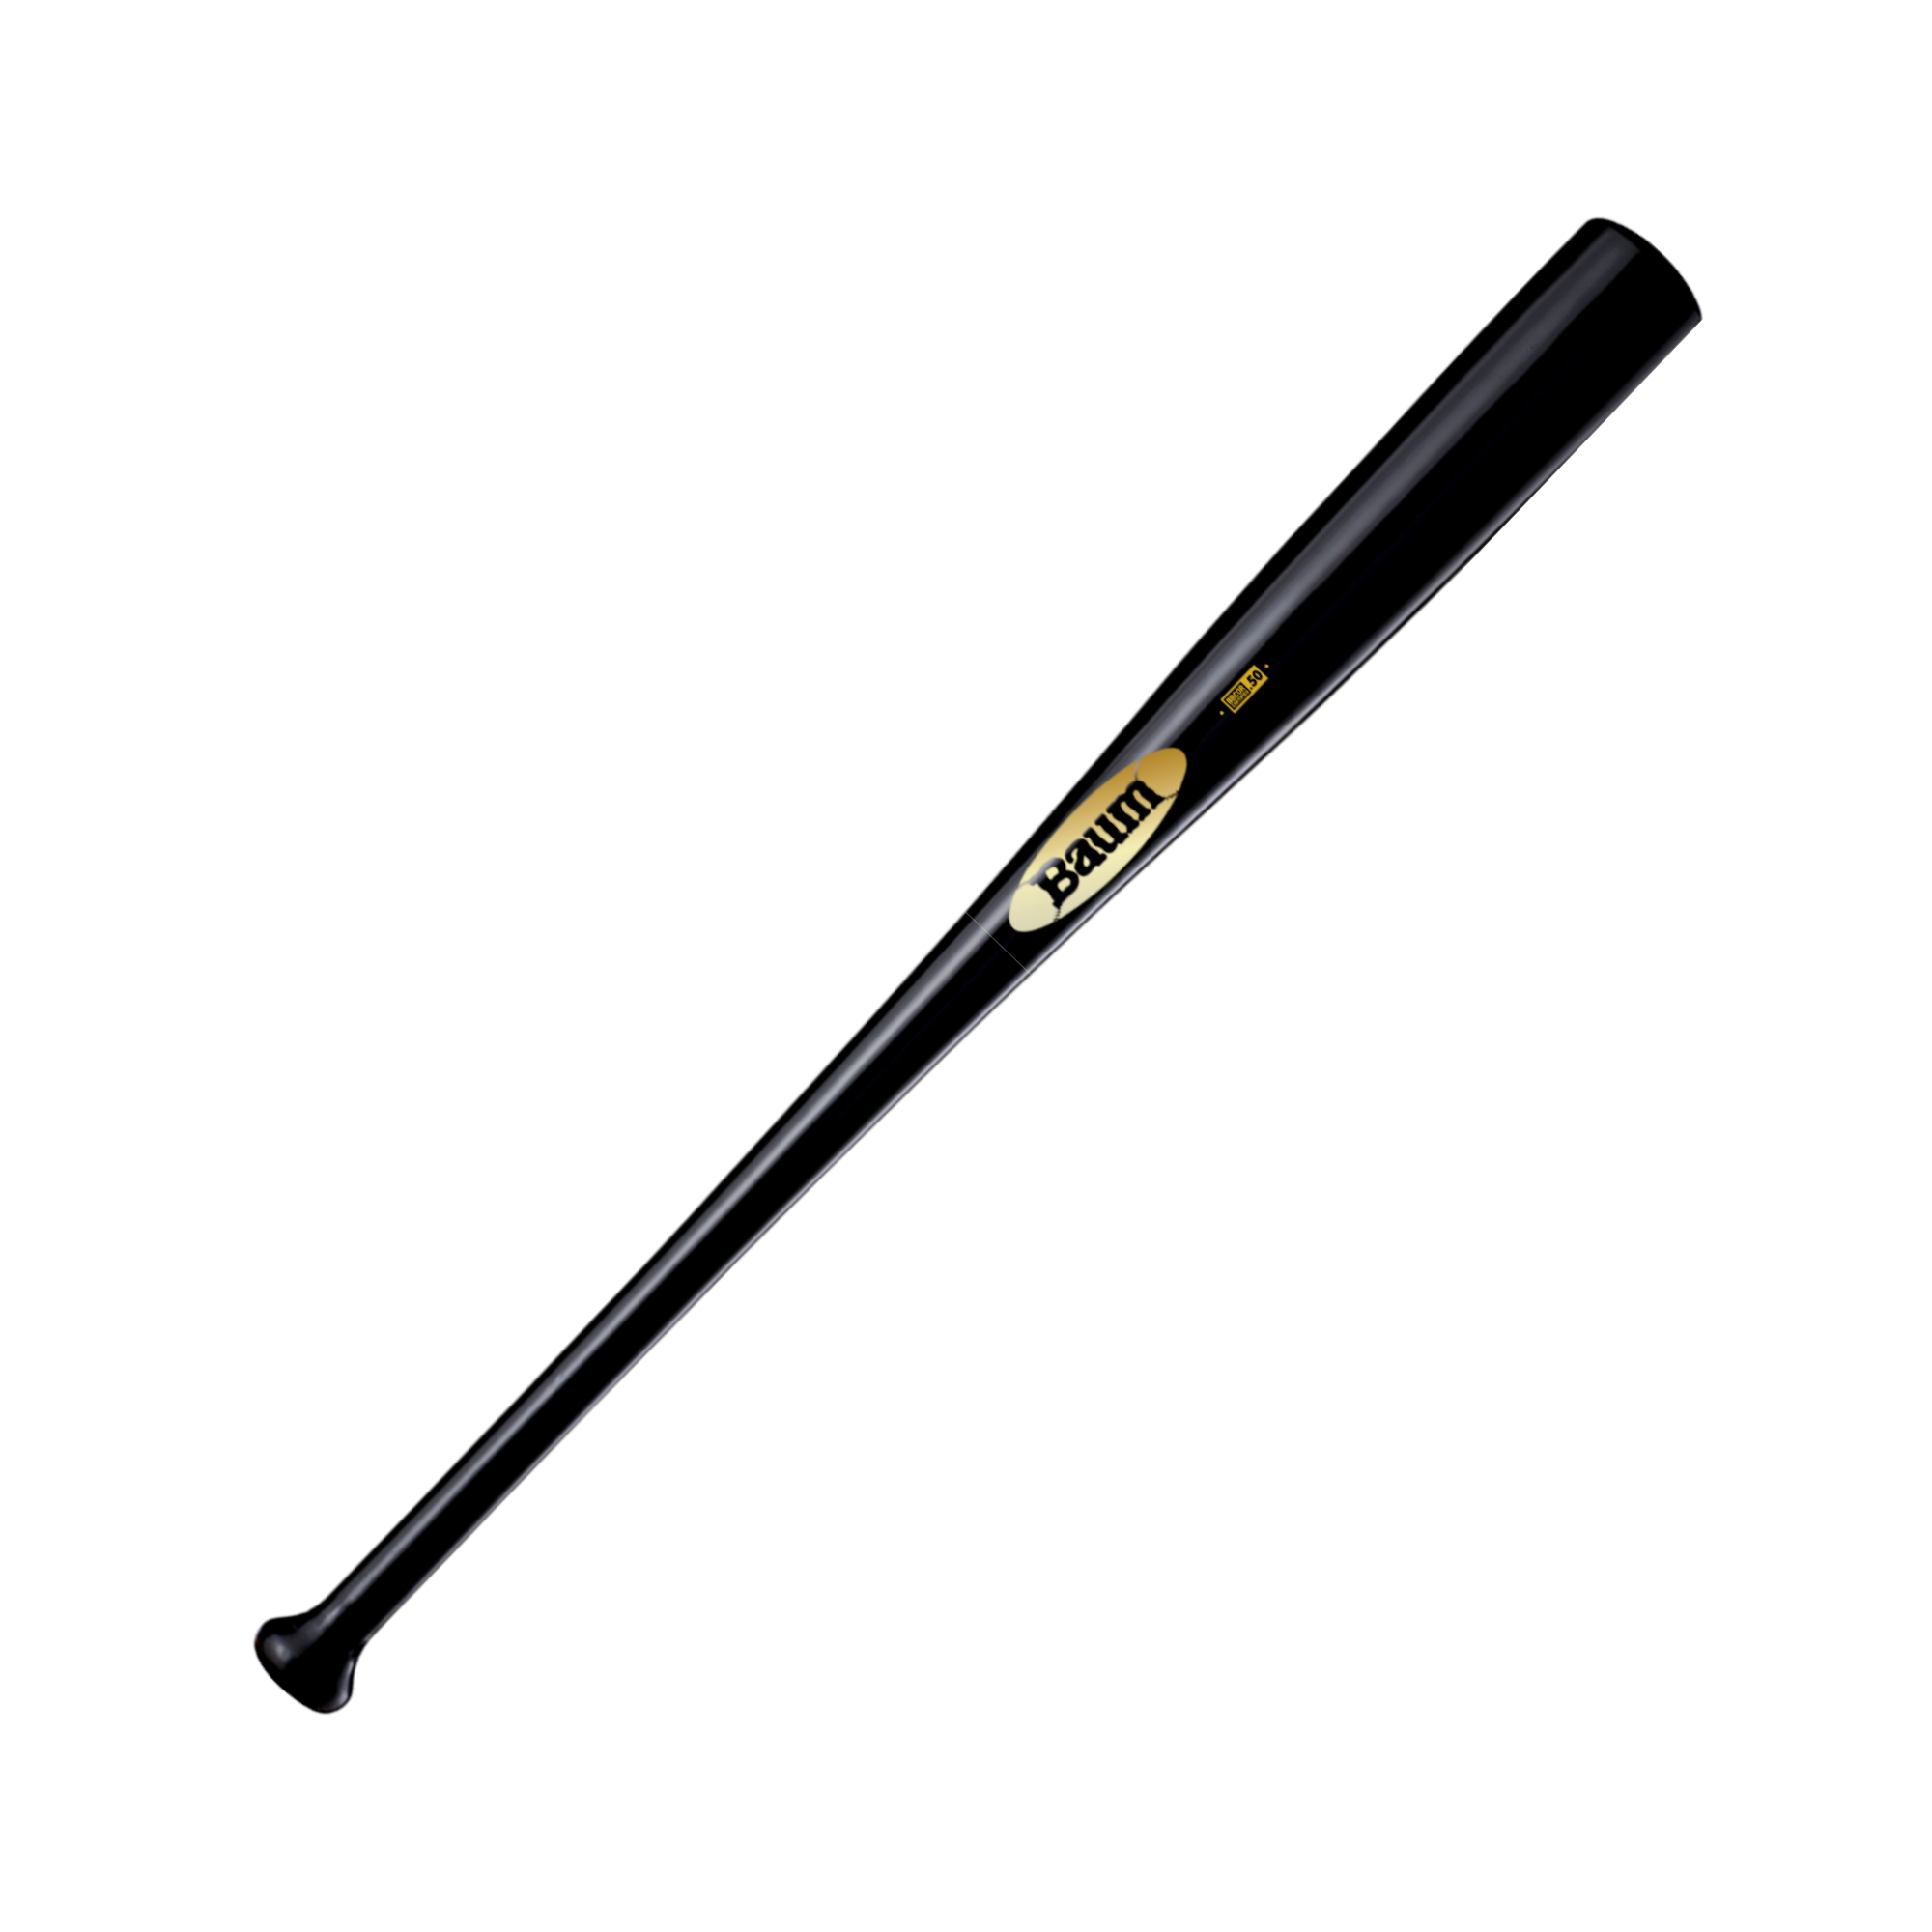 Baum Bat Maple Standard Gold Stock -3 Black